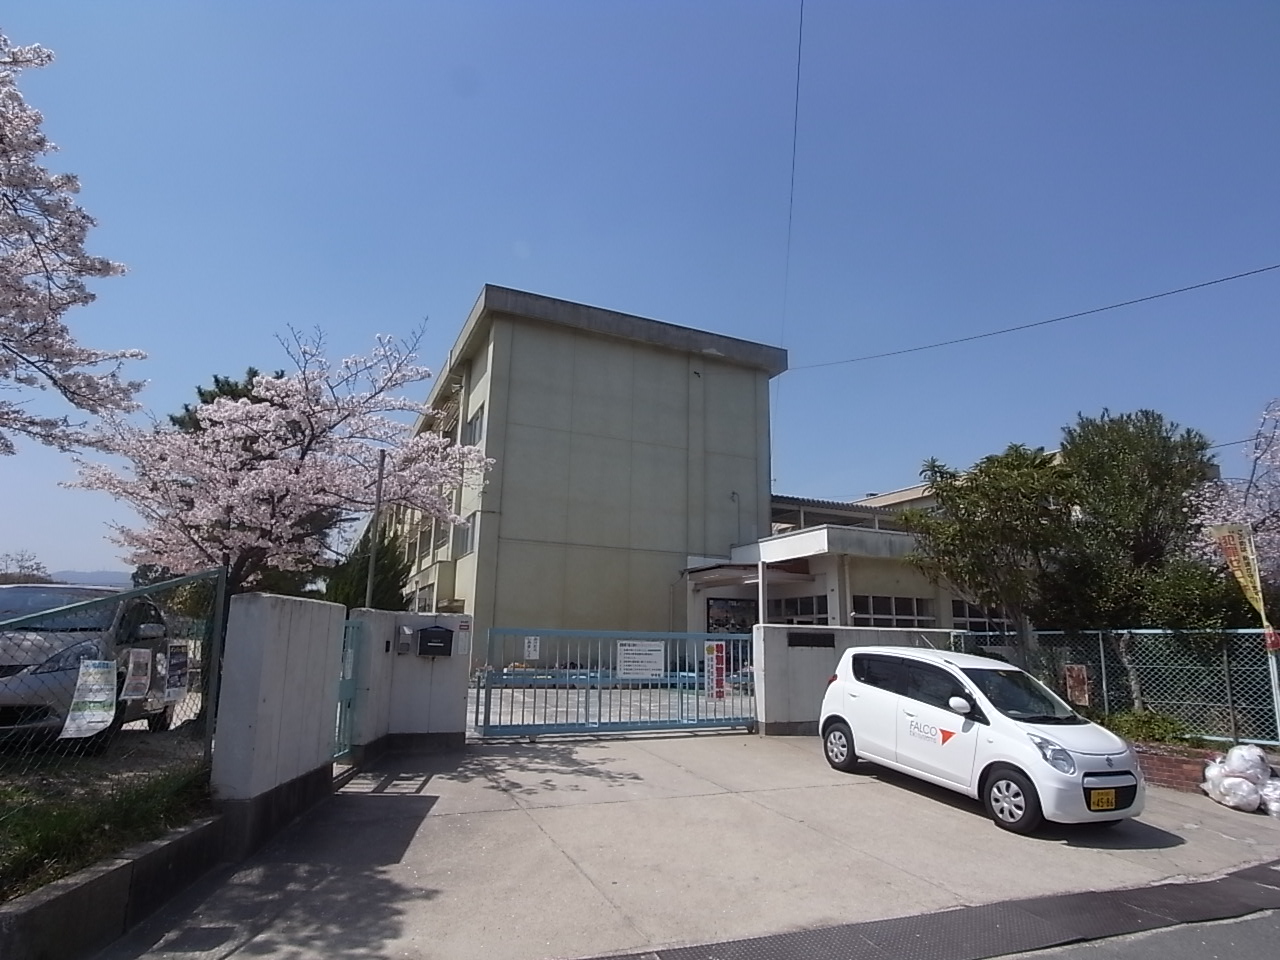 Primary school. Fushimi up to elementary school (elementary school) 315m